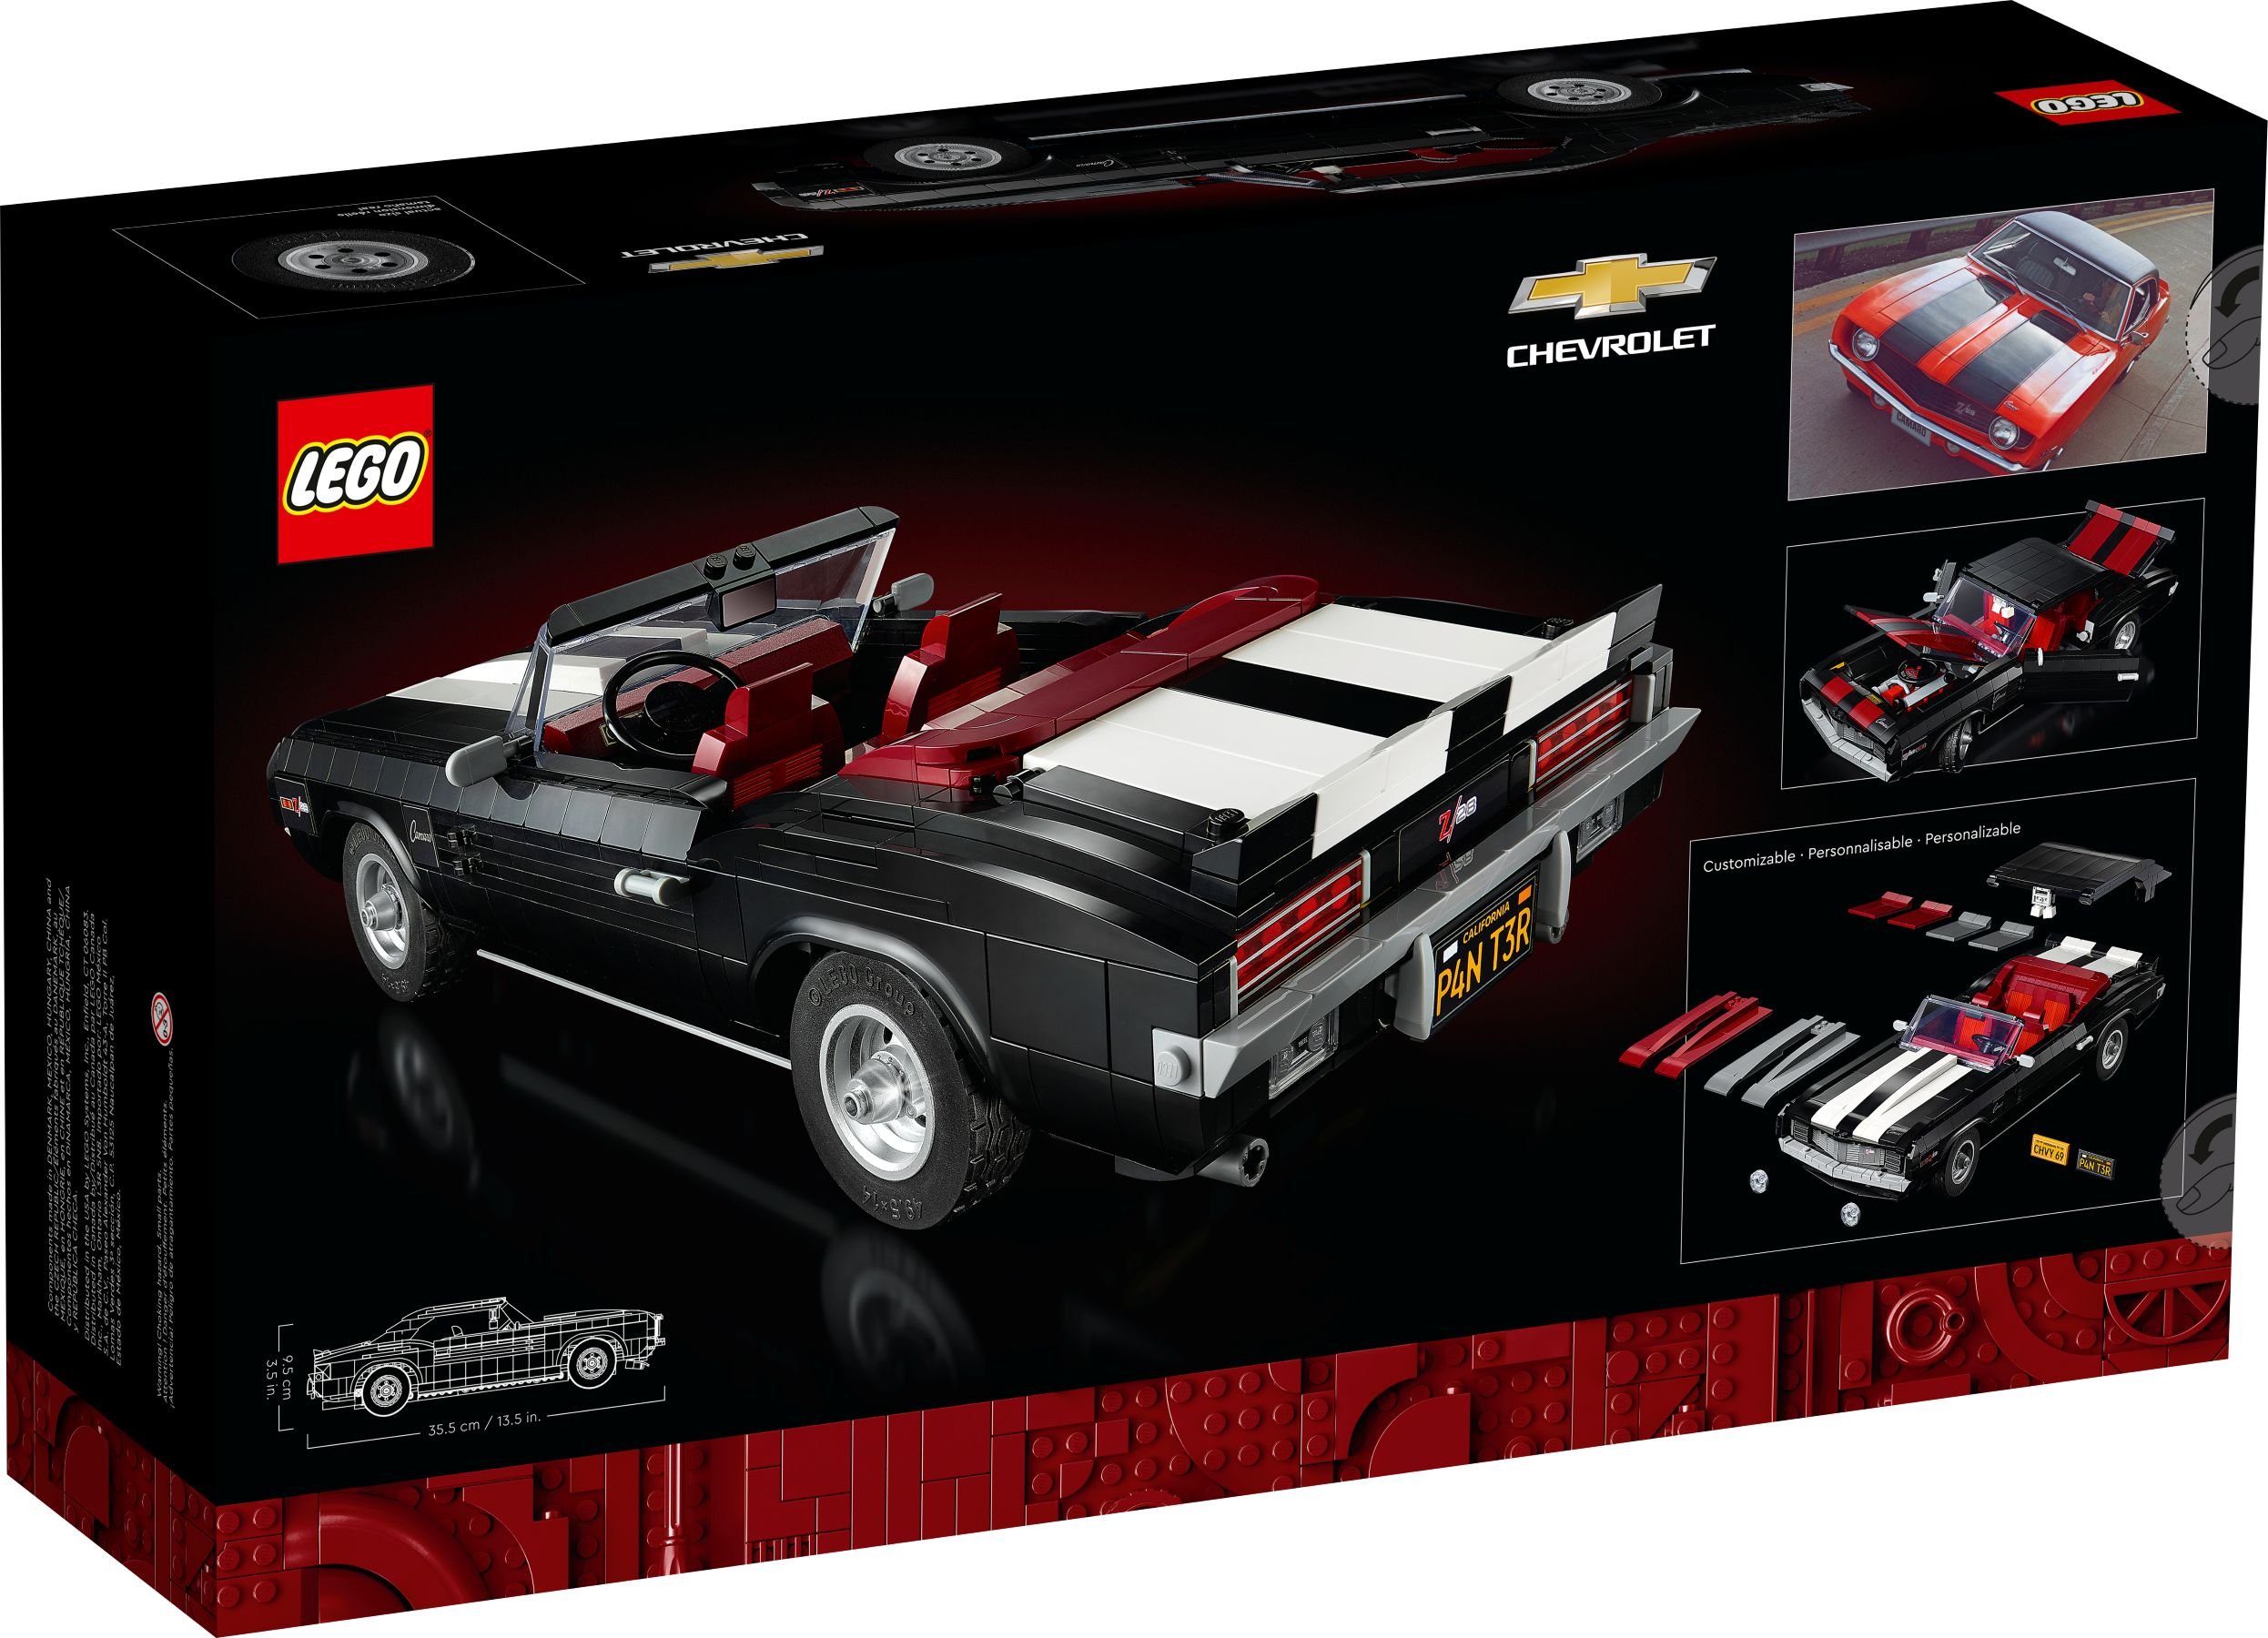 LEGO Advanced Models 10304 Chevrolet Camaro Z28 LEGO_10304_alt9.jpg